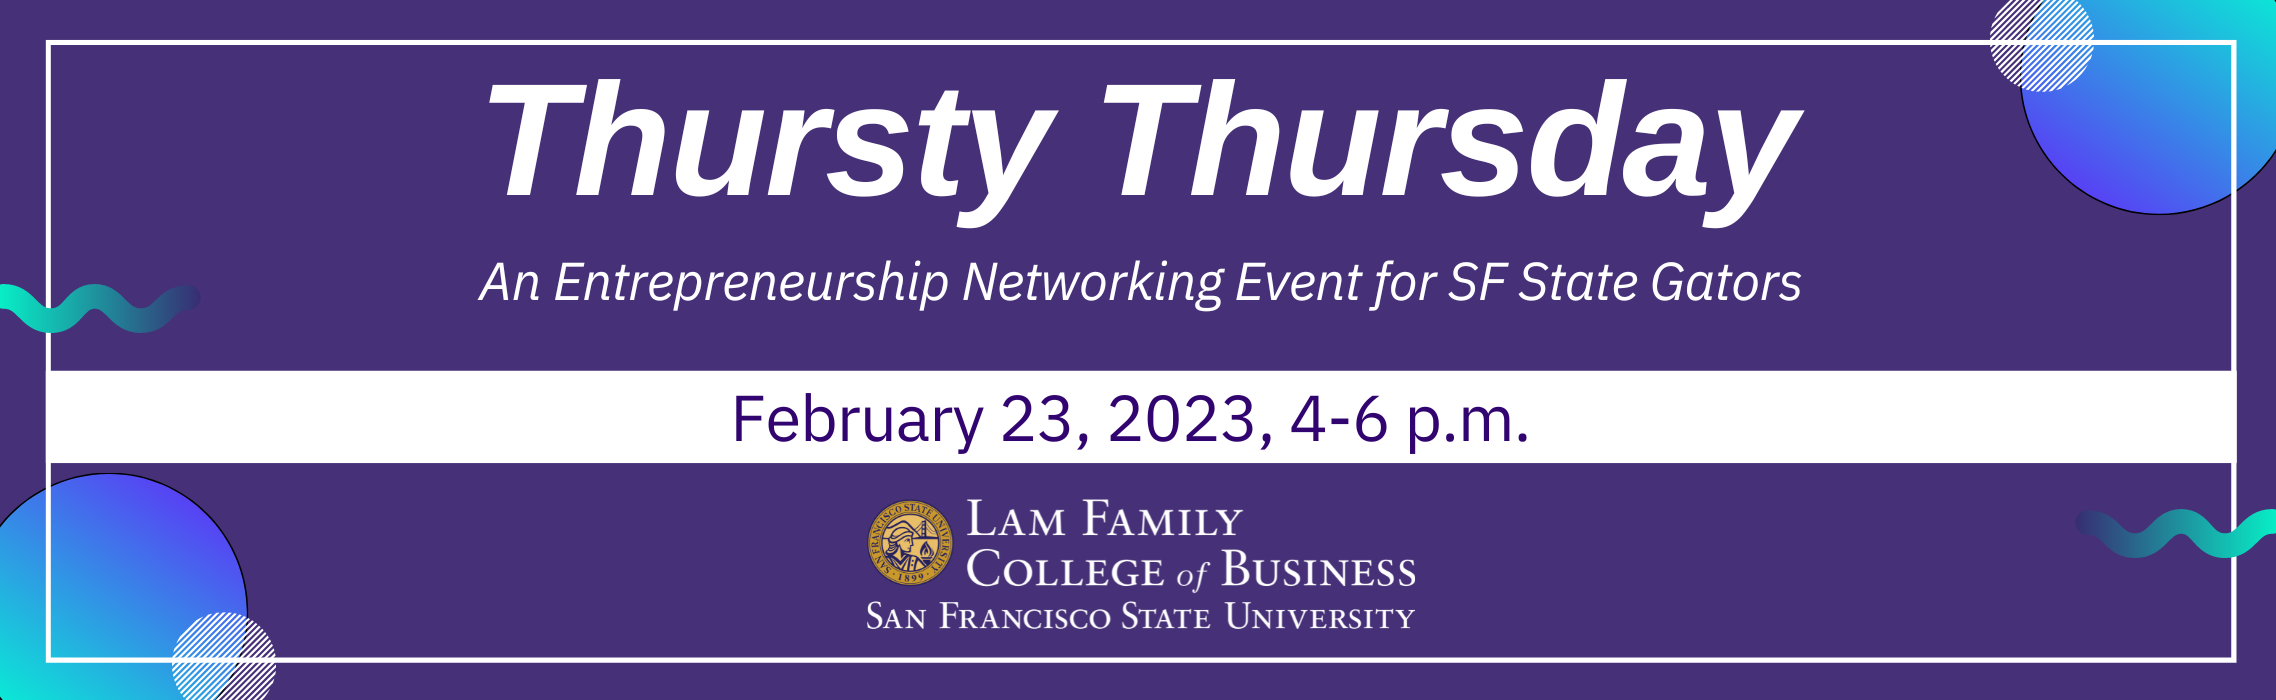 Thursty Thursday Networking Event - 2023 - web header